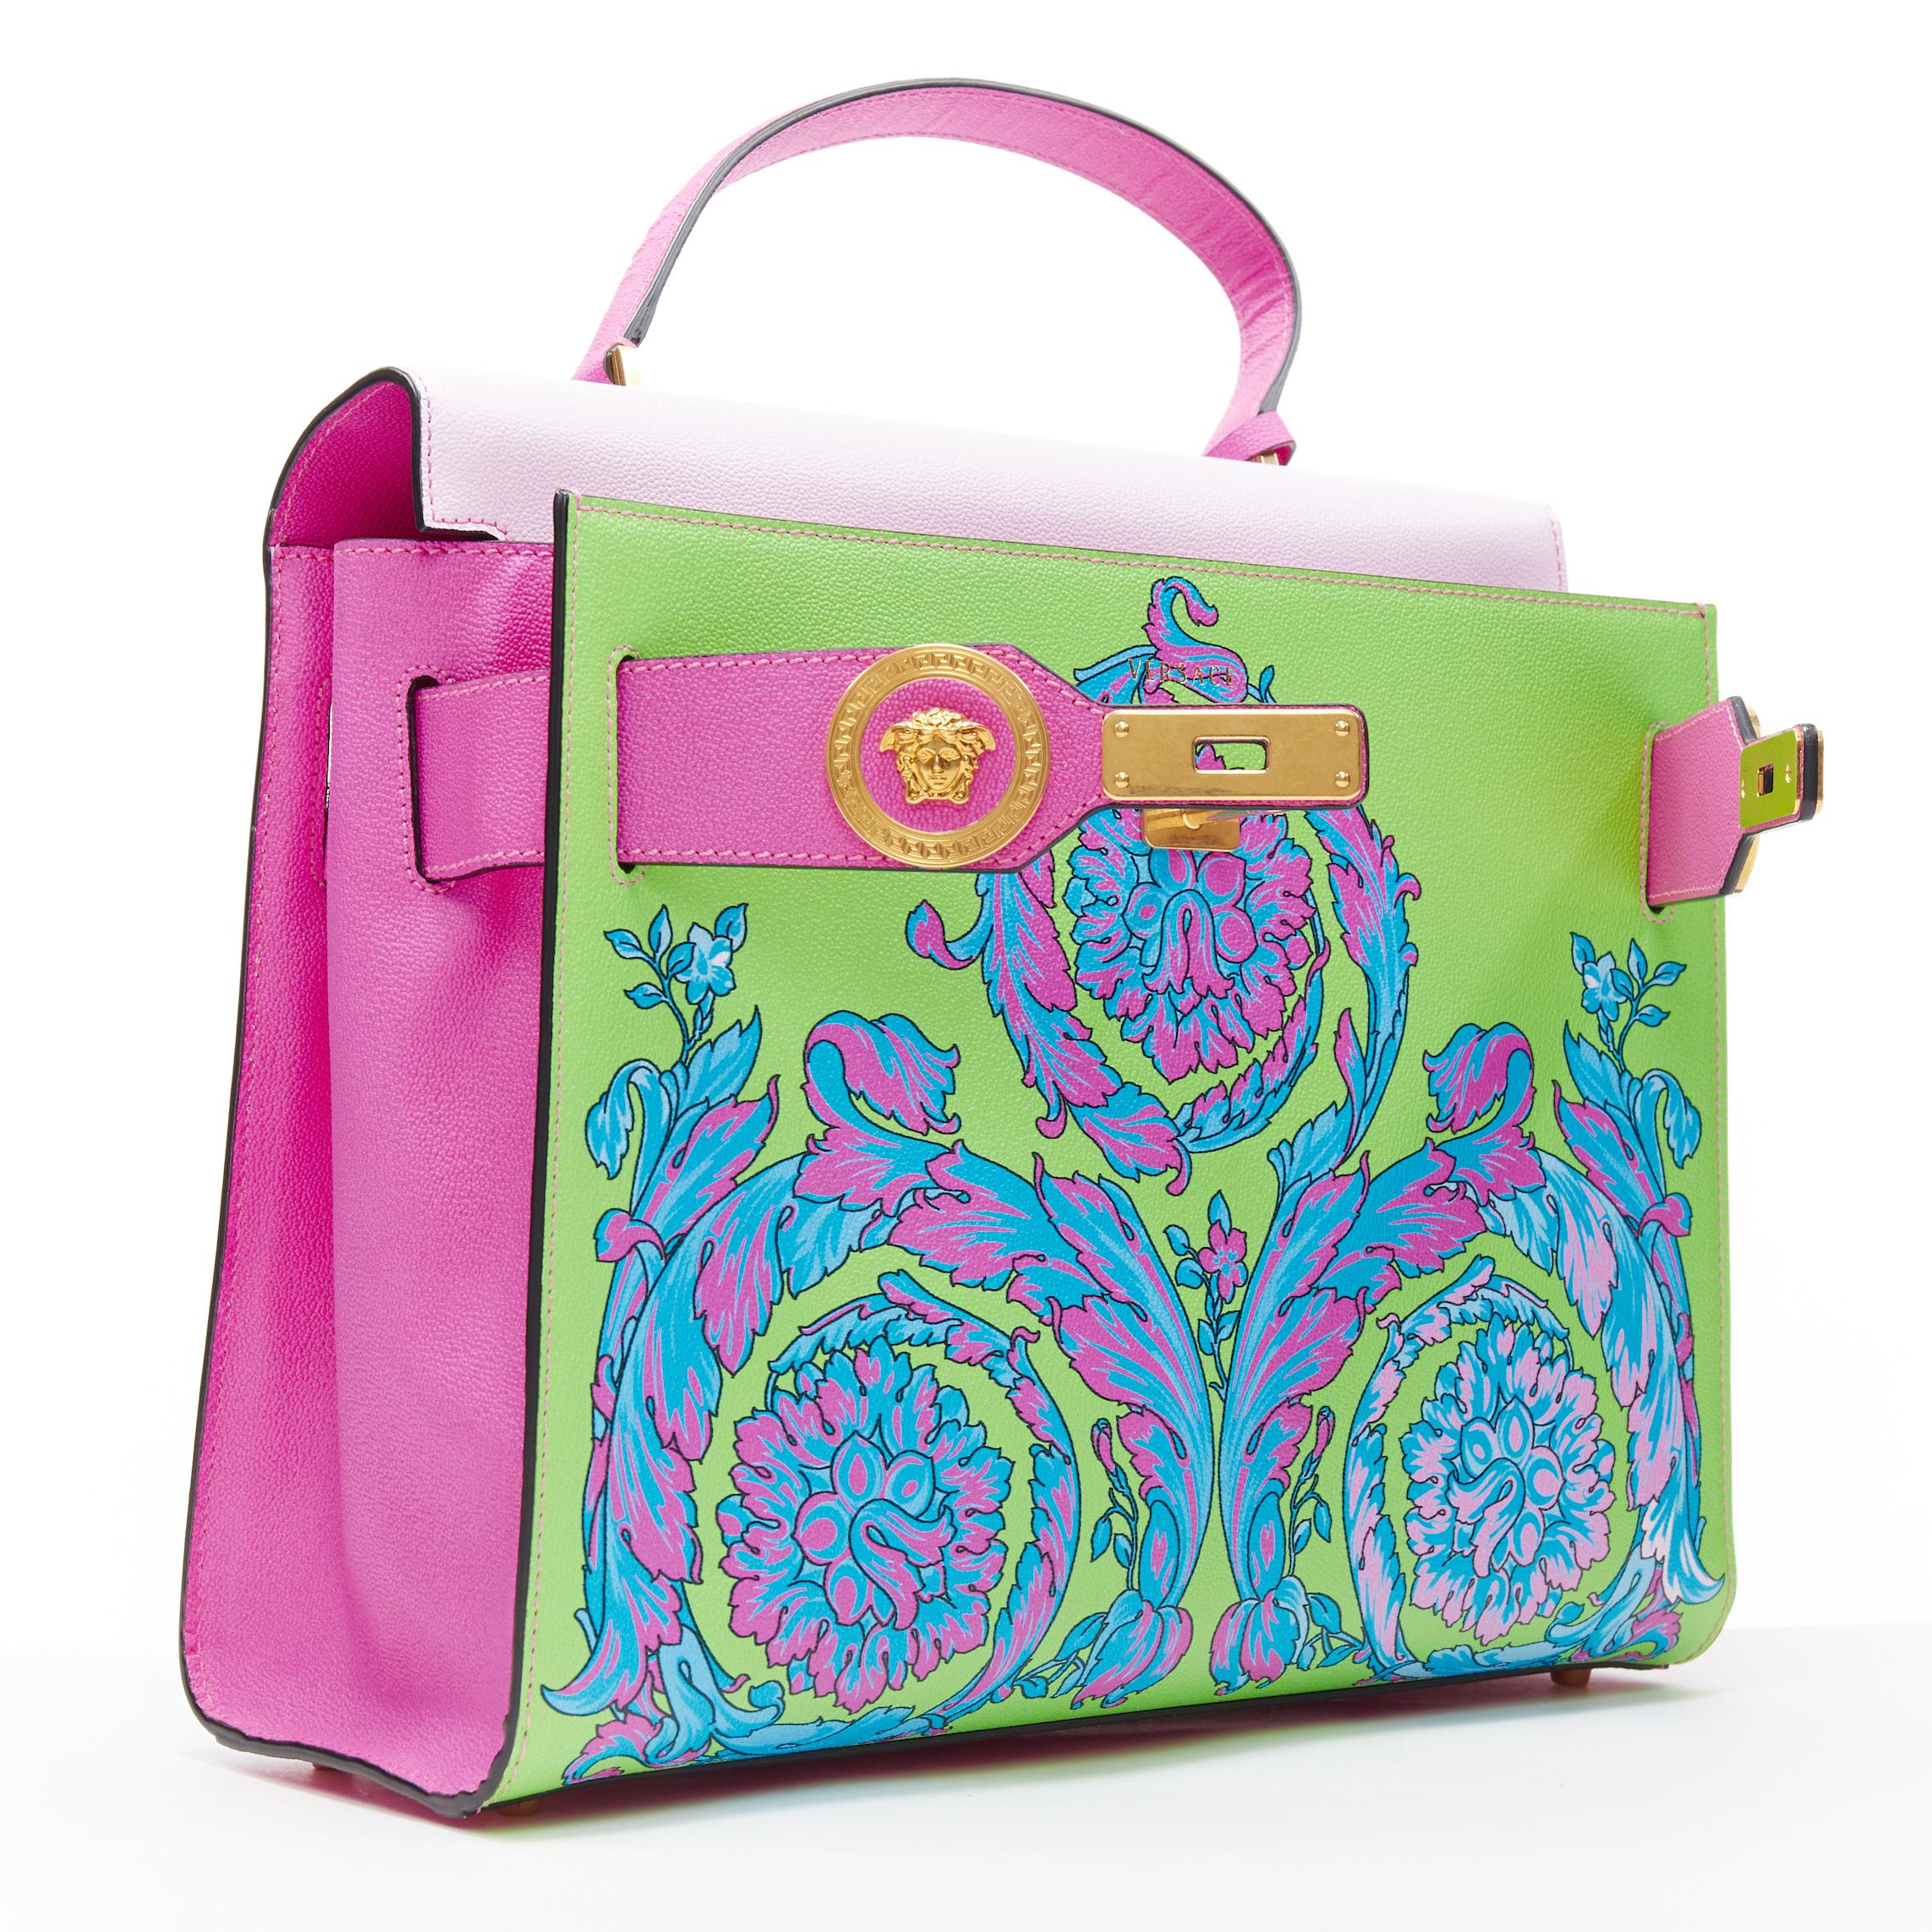 Gray new VERSACE Technicolor Baroque Diana Tribute print top handle Kelly satchel bag